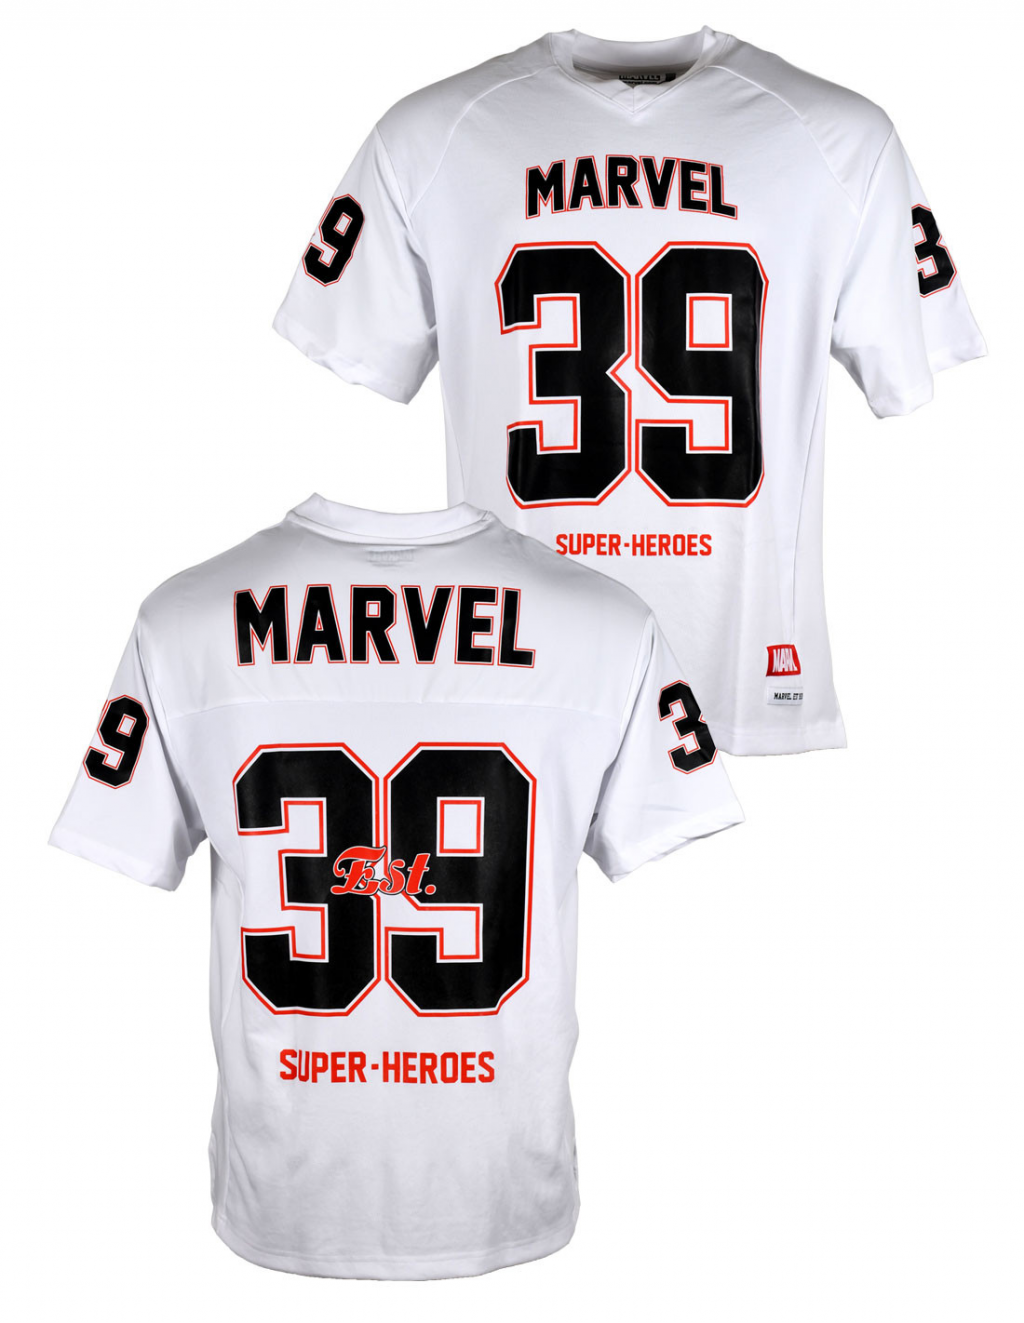 MARVEL - Super Heroes - T-Shirt Sports US Replica unisex (S)